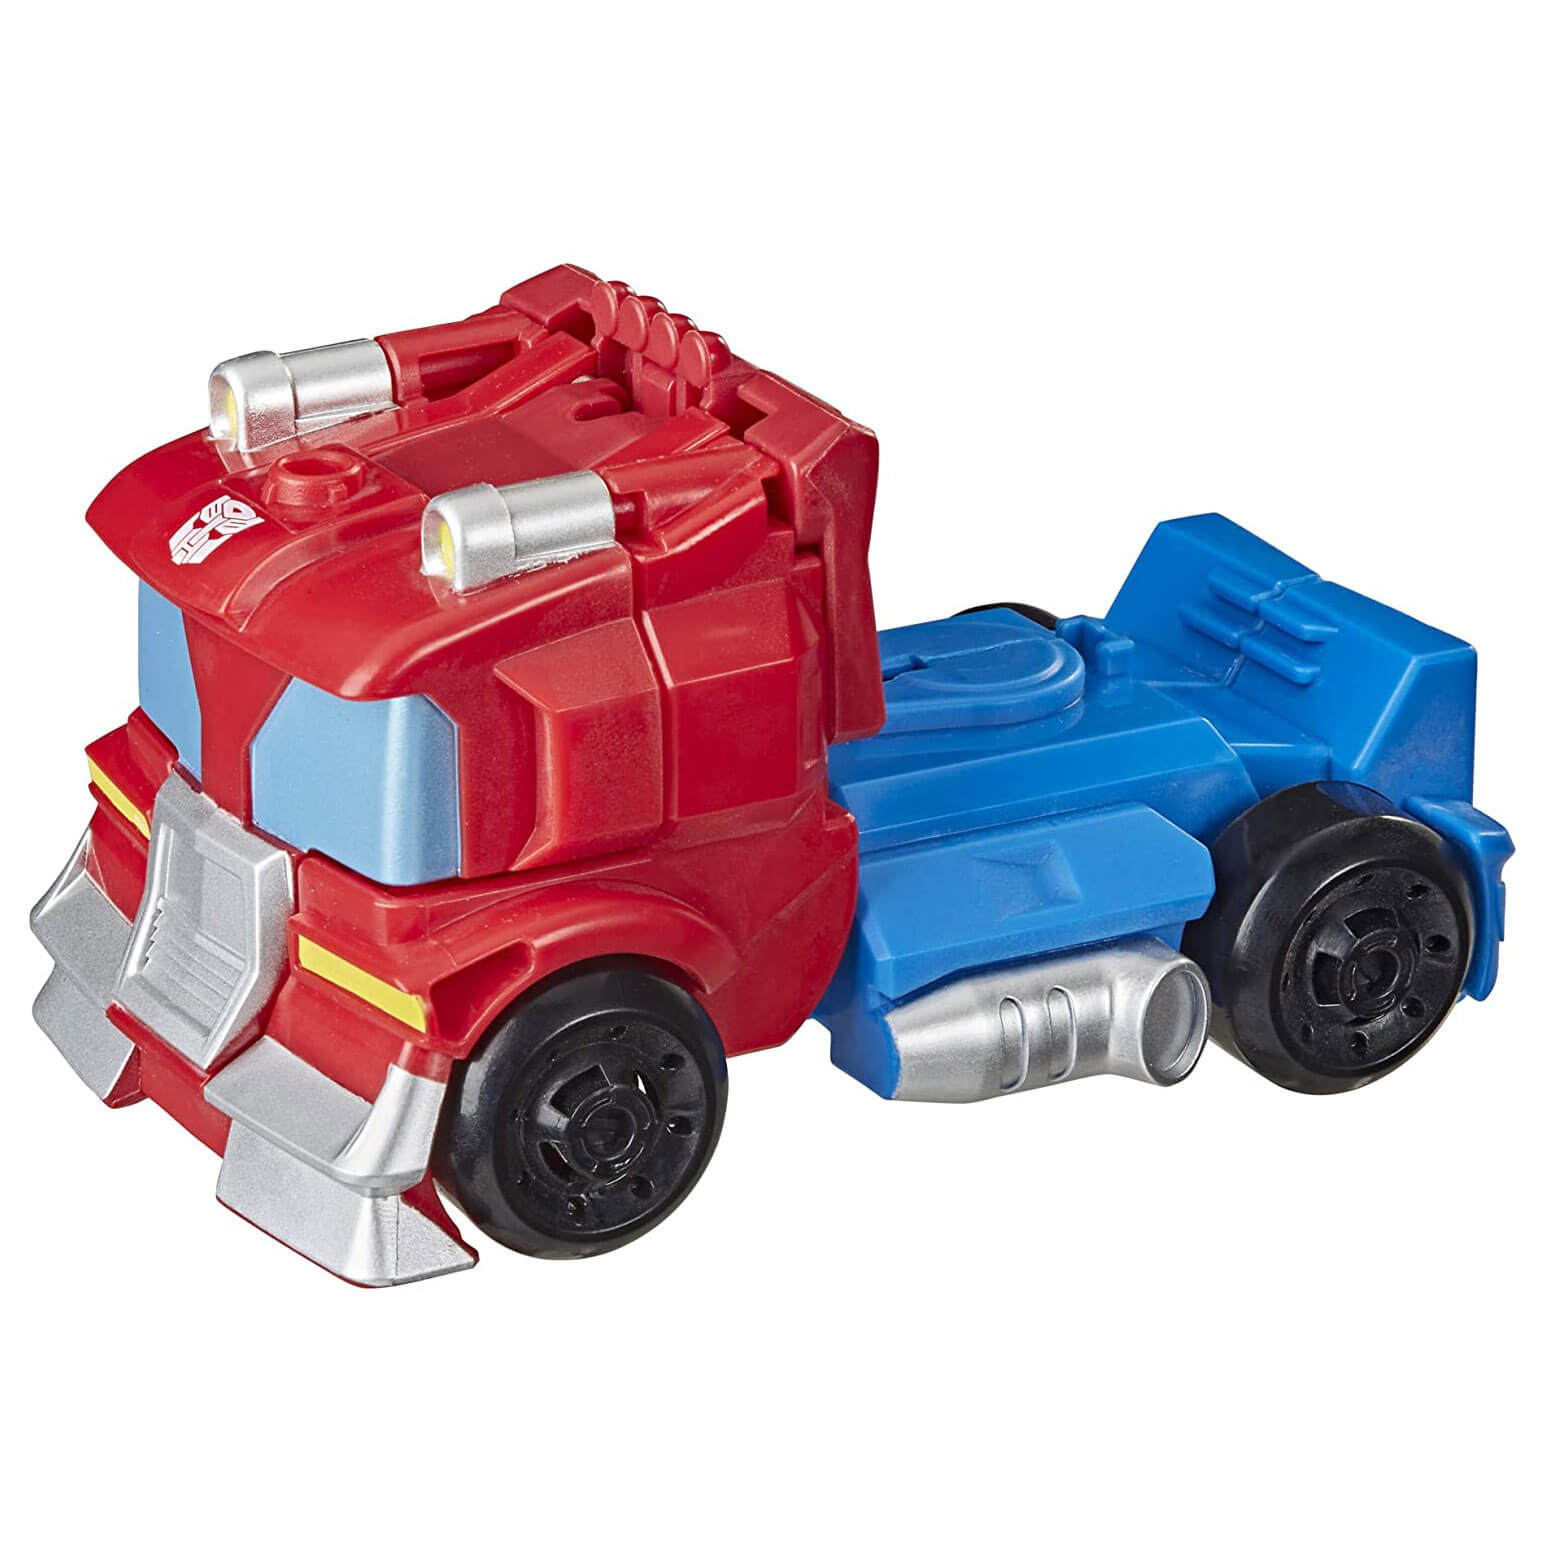 Transformers Rescue Bots Academy Classic Heroes Team Optimus Prime Figure